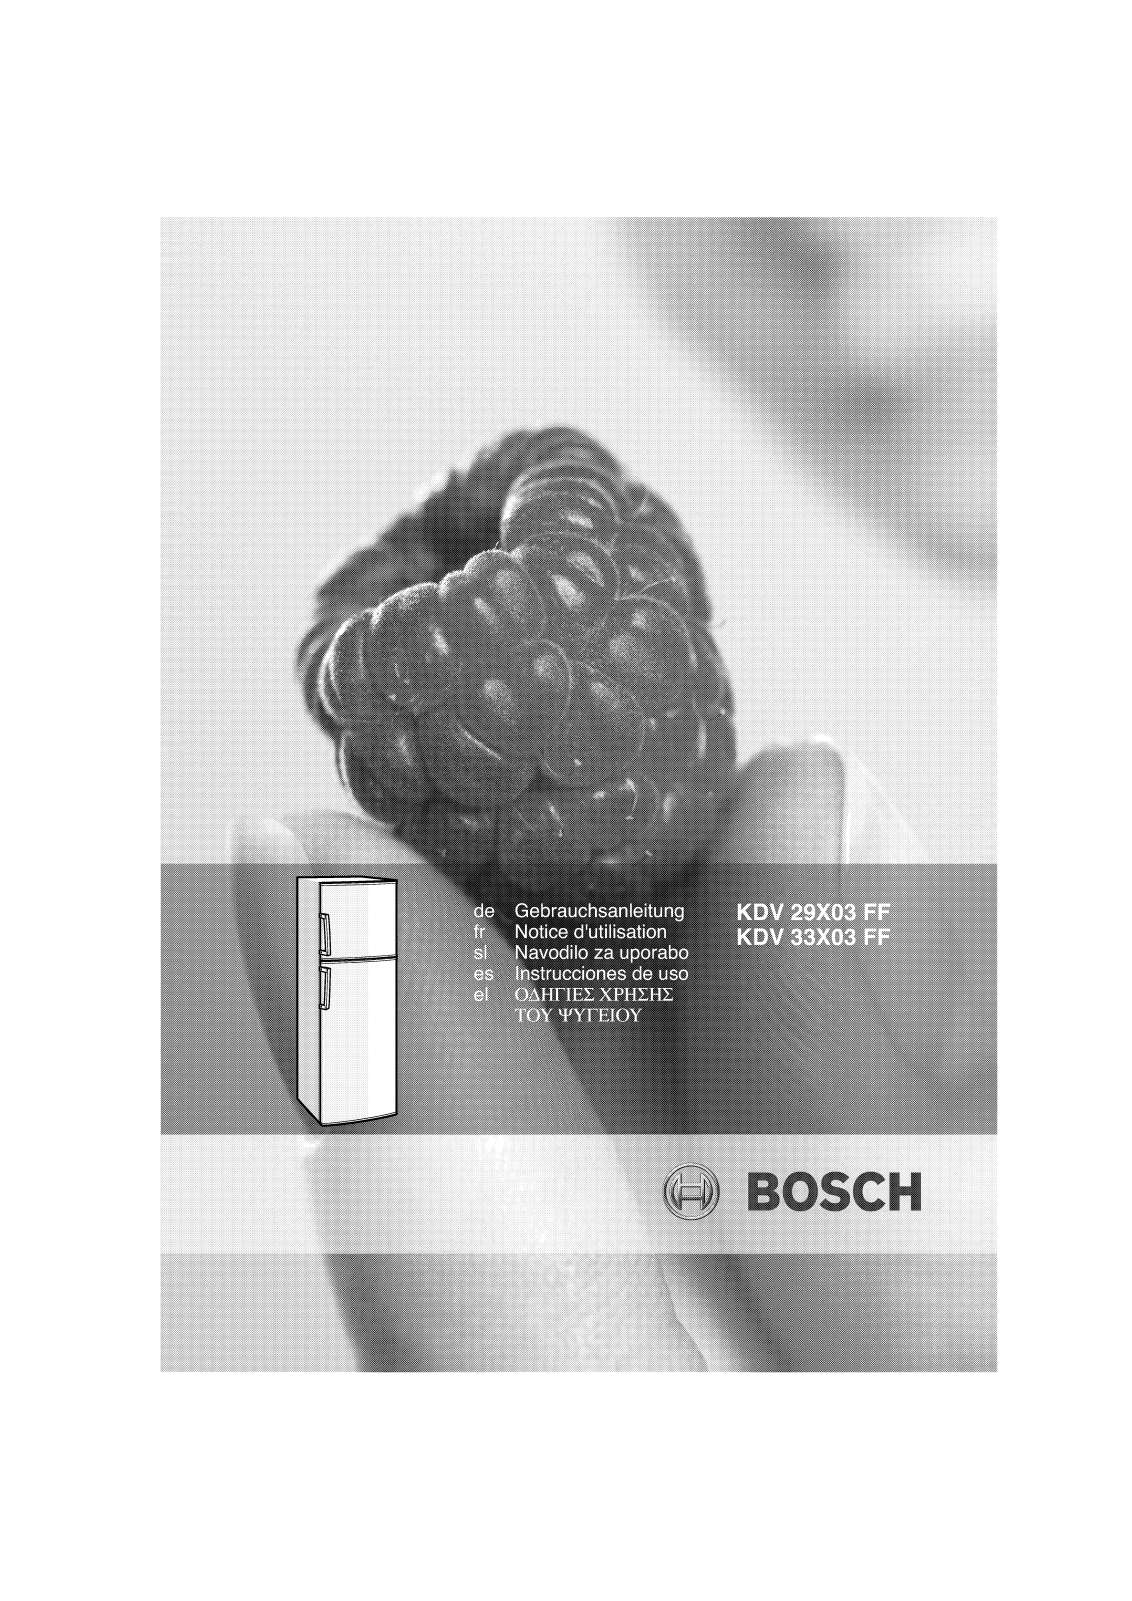 BOSCH KDV33X03 User Manual